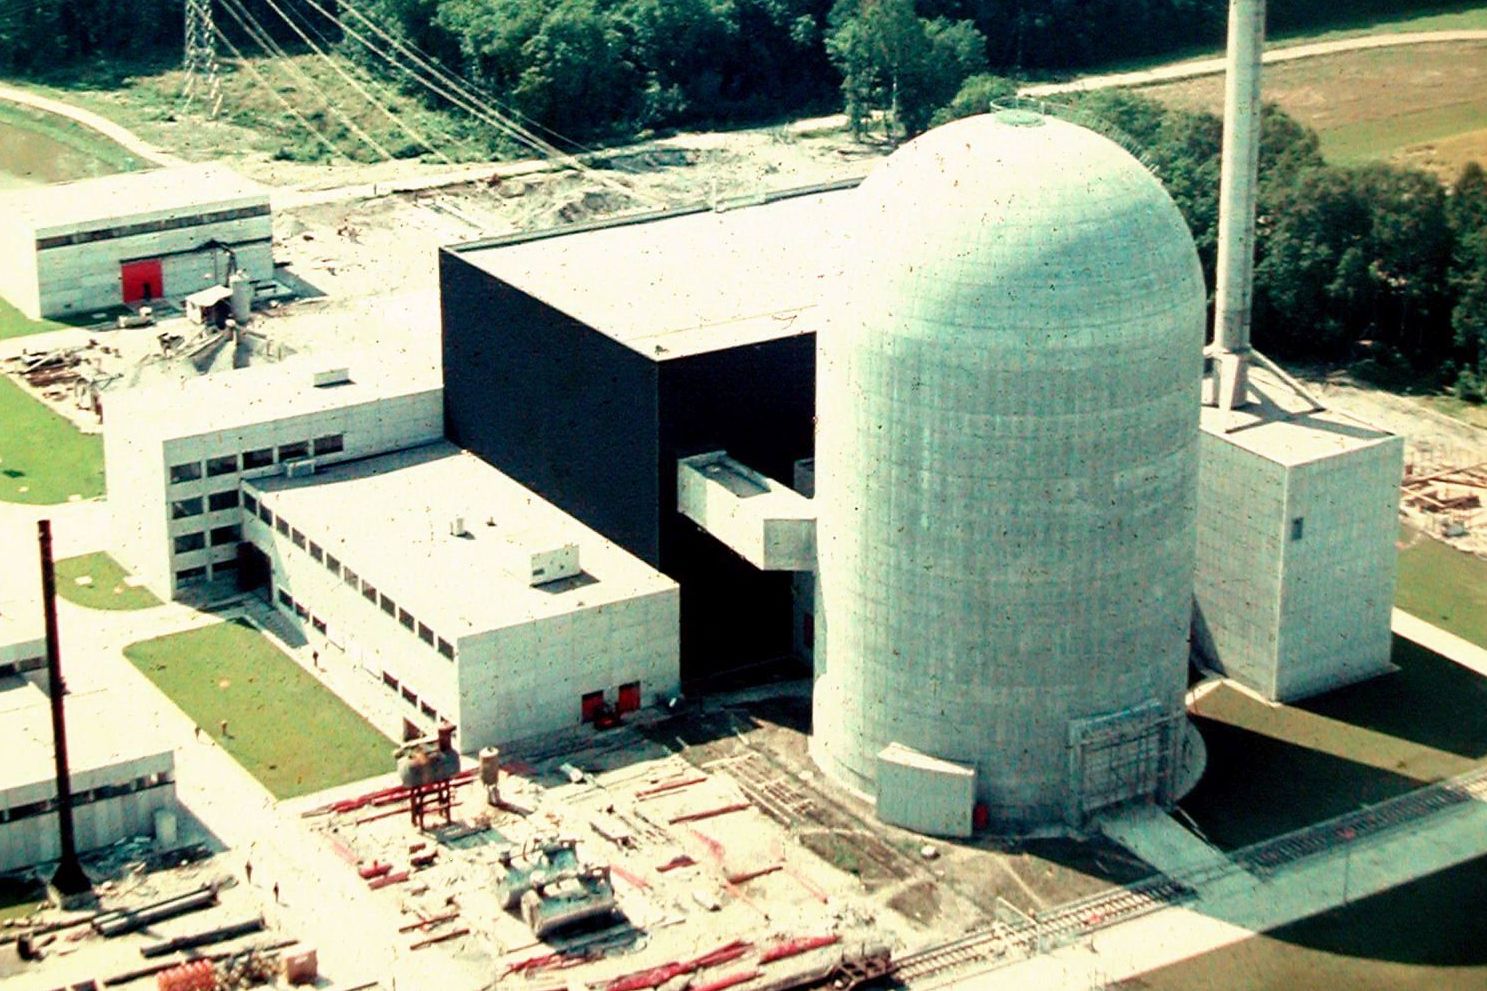 Kernkraftwerk Gundremmingen, 1966